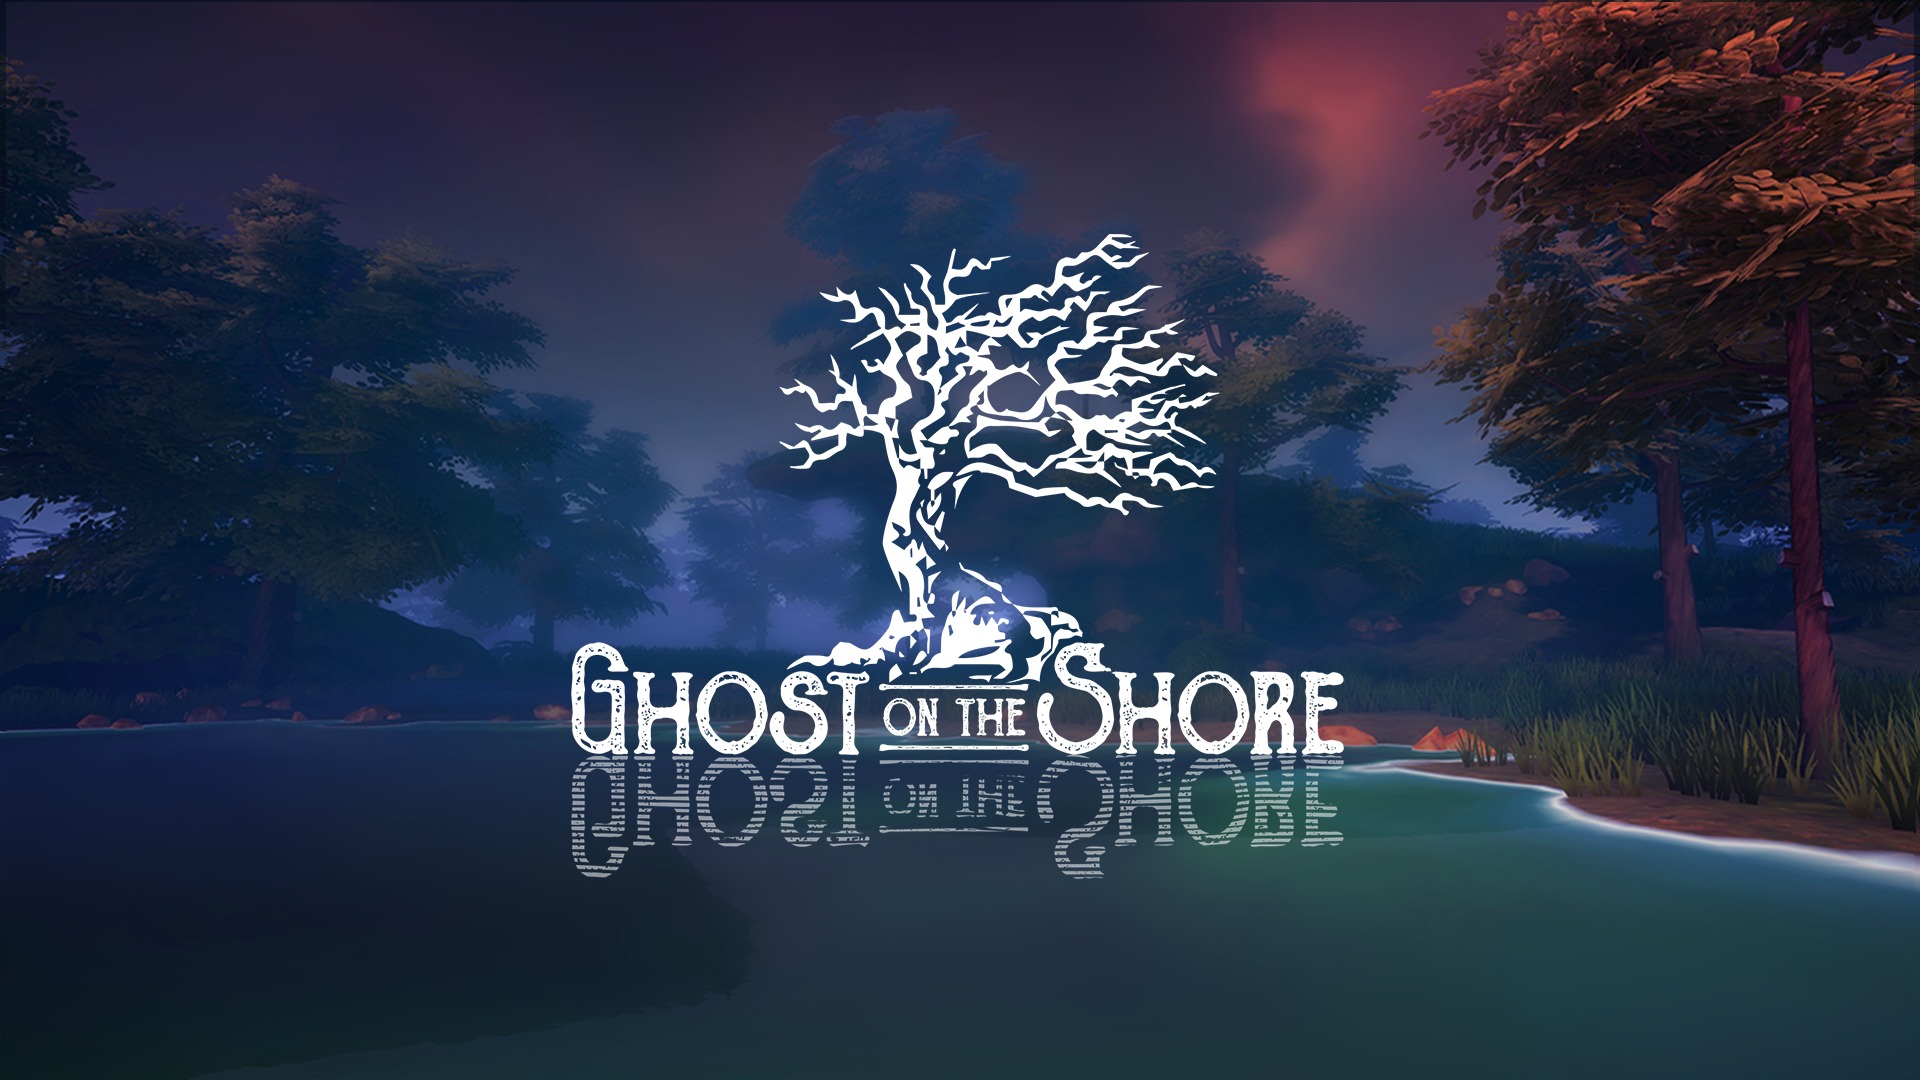 ghost on the shore lyrics genius